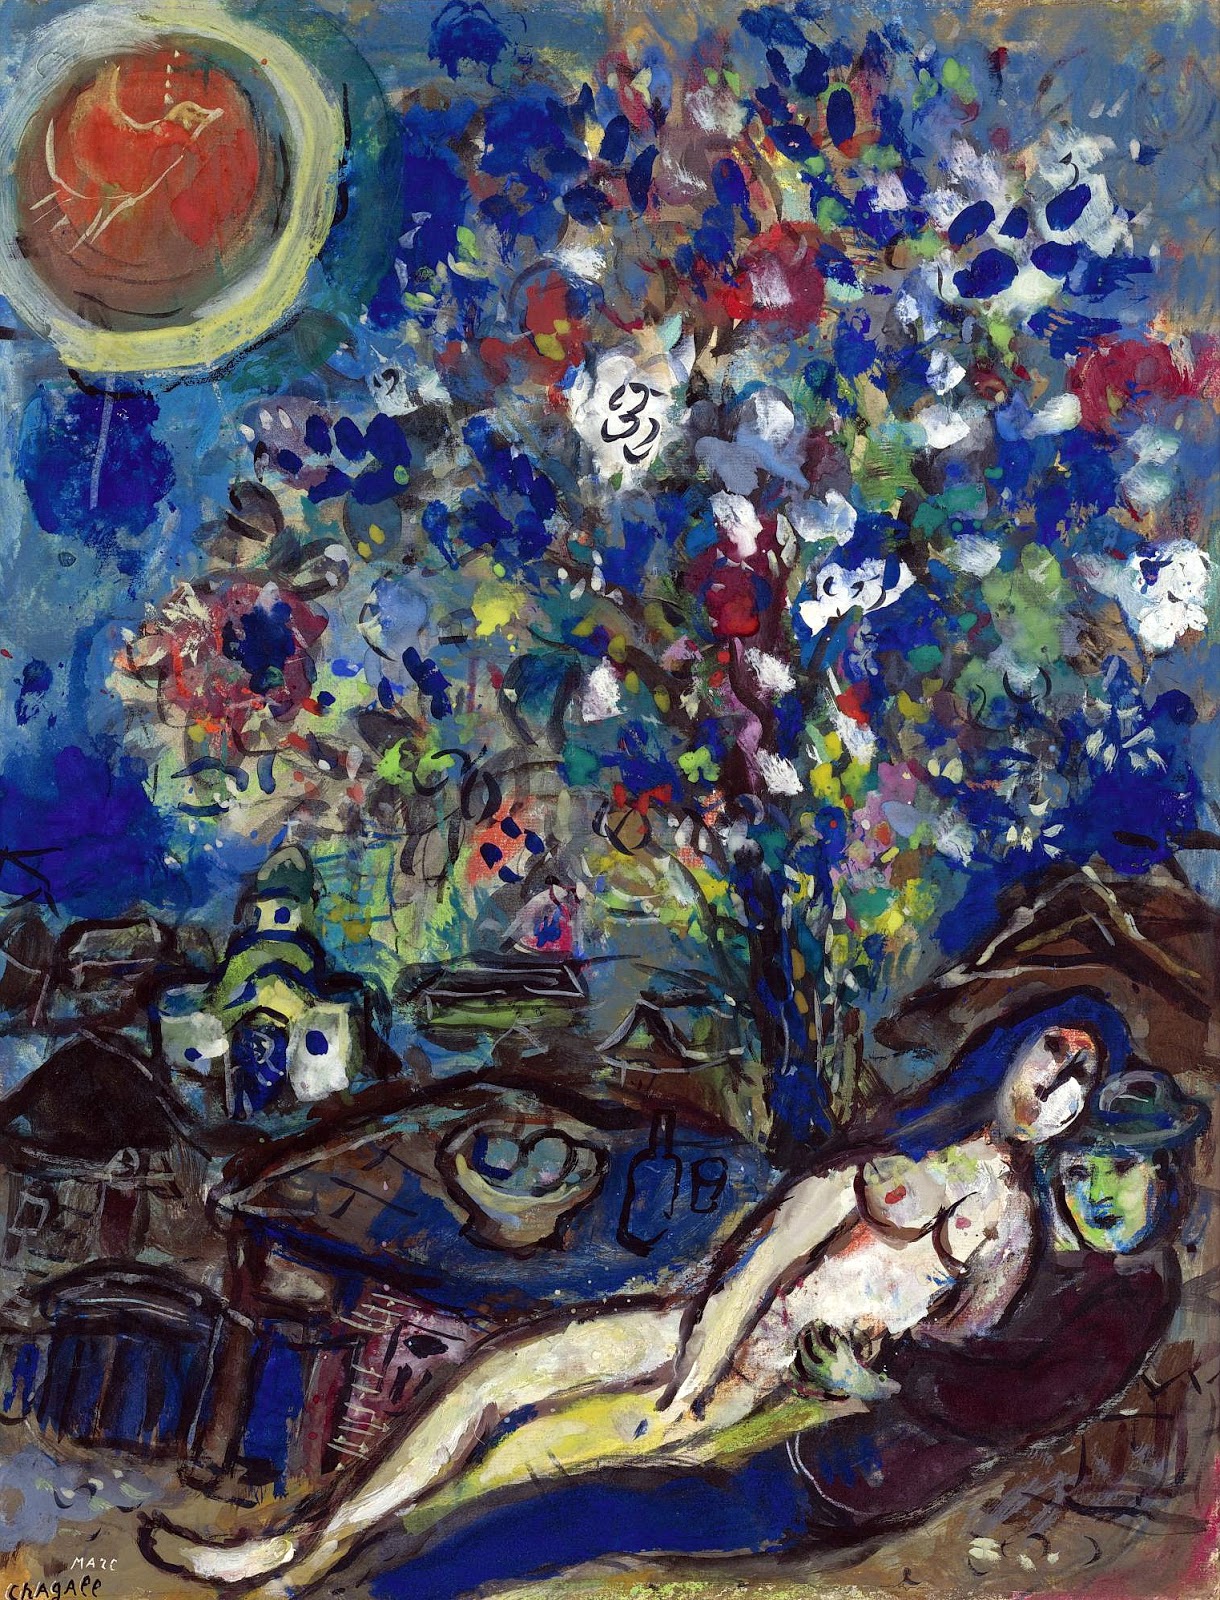 Marc+Chagall-1887-1985 (253).jpg